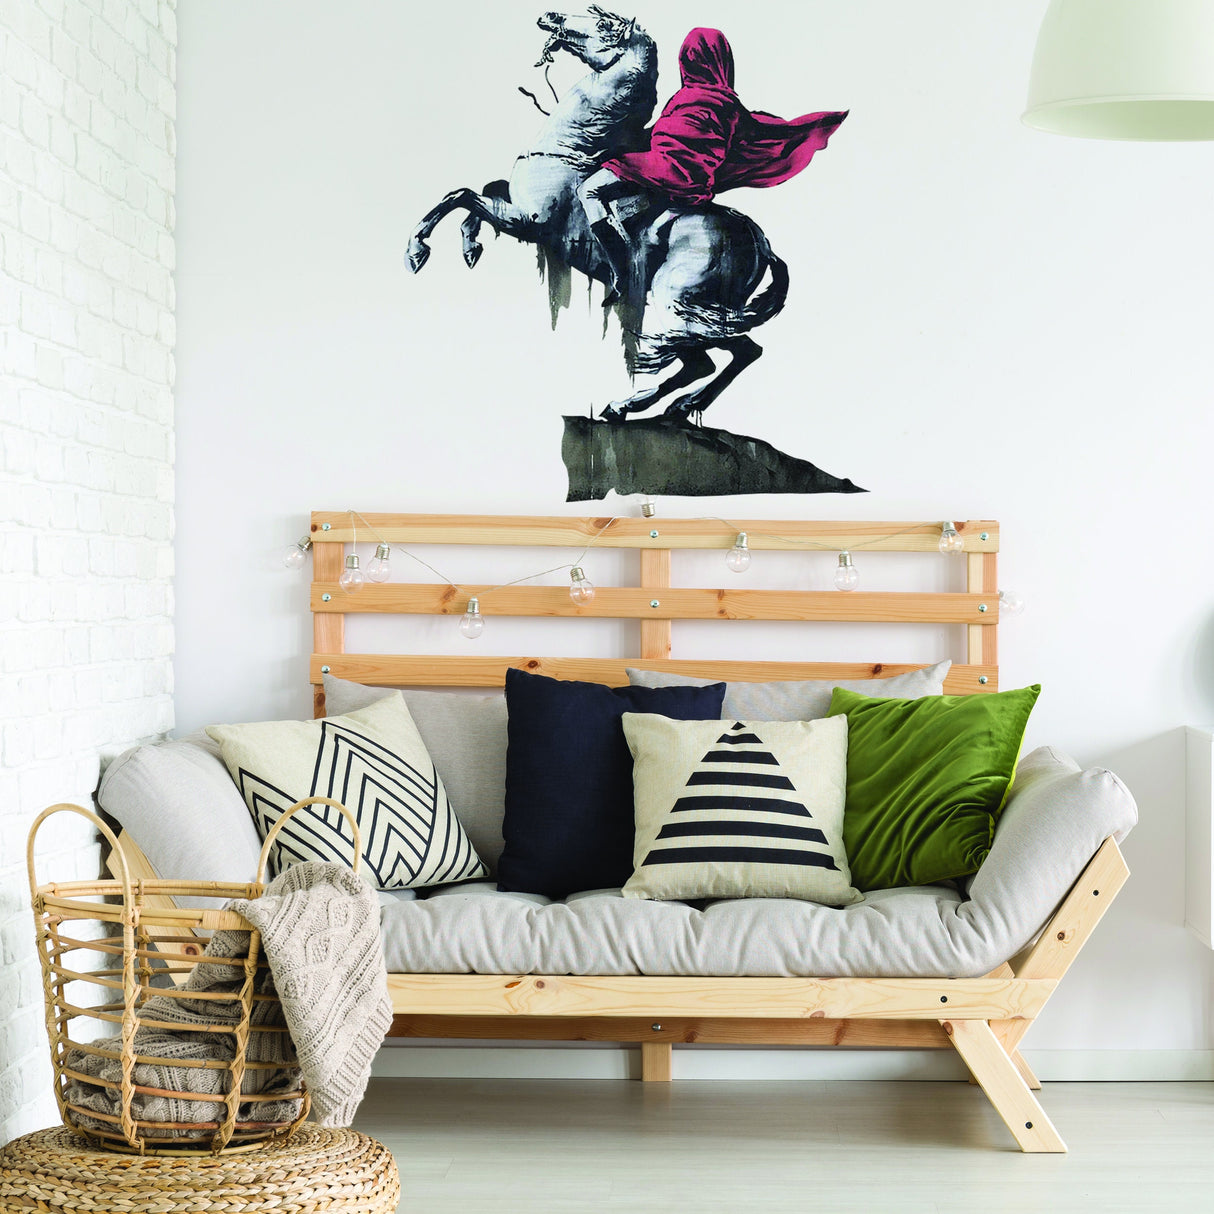 Banksy Napoleon Vinyl Wall Sticker - Art Home Decor Cool And Premium Waterproof Decal